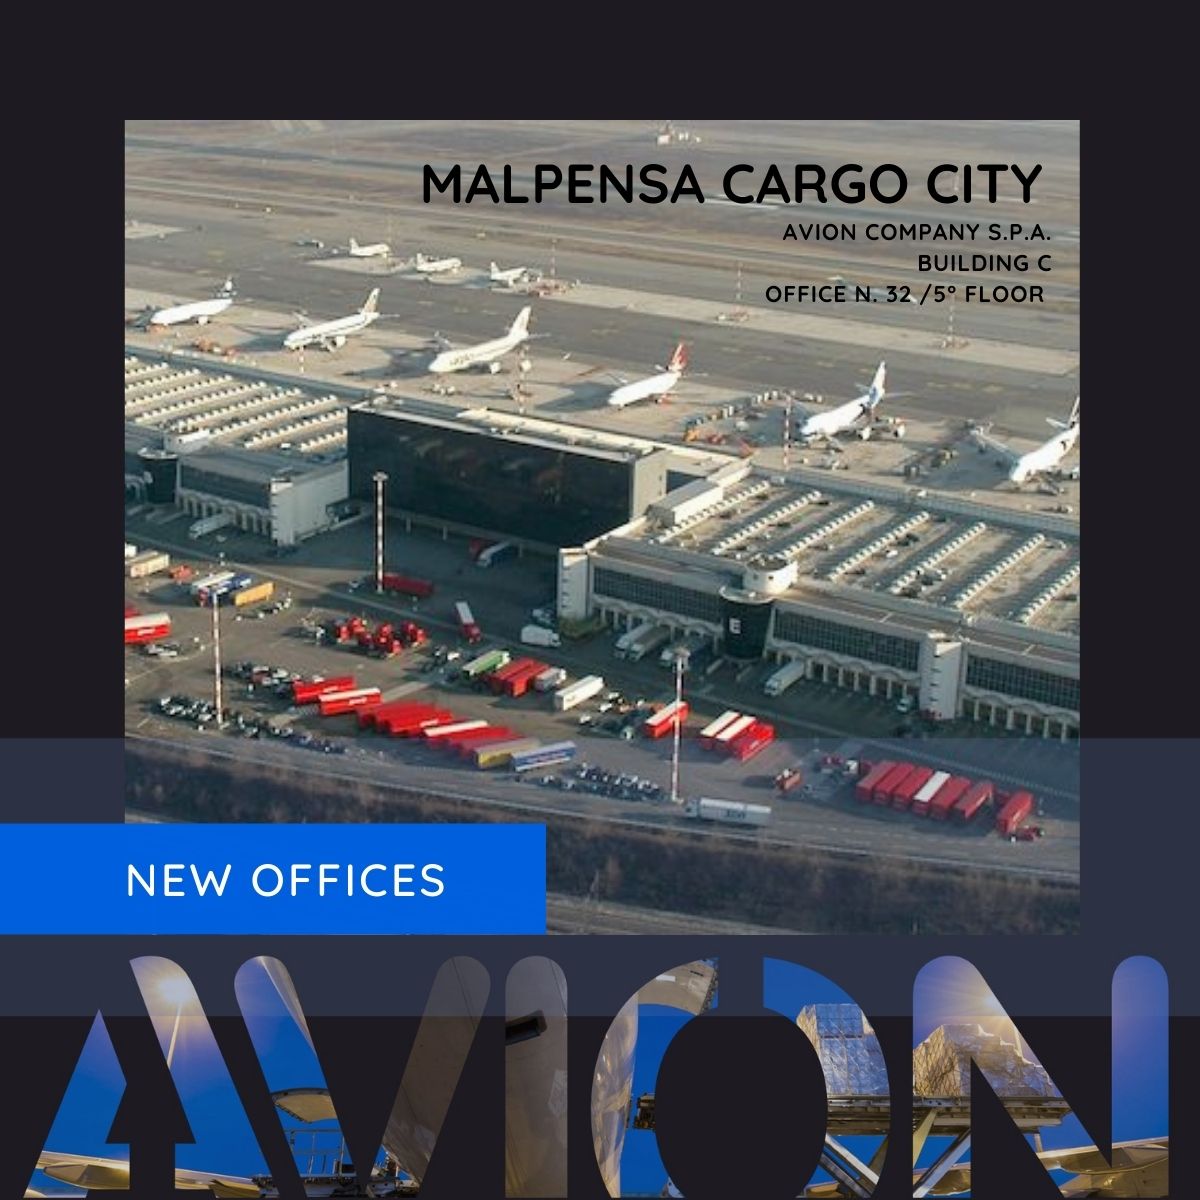 Opening new Avion offices at Malpensa Cargo City